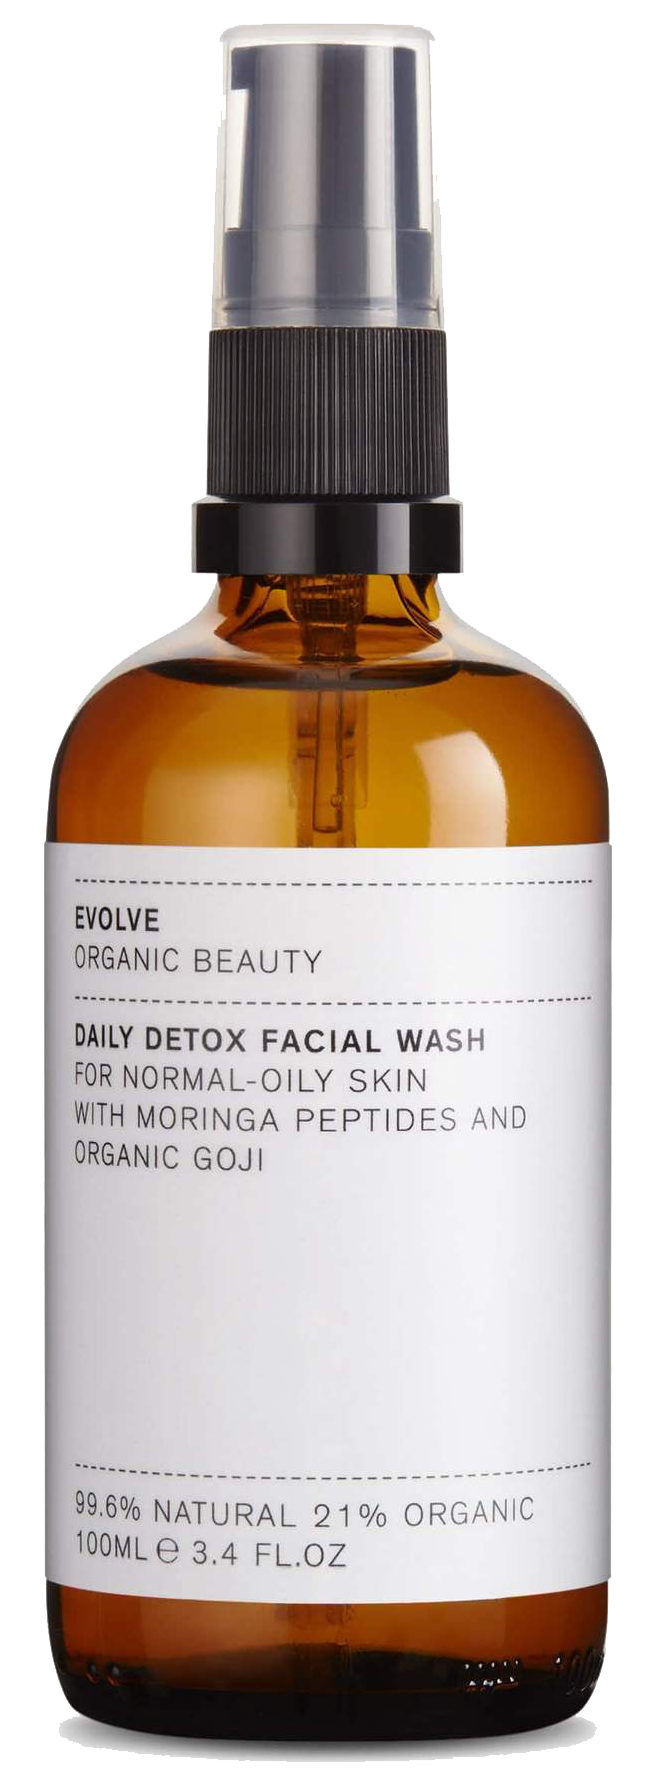 Evolve Daily Detox Facial Wash ohne Hintergrund